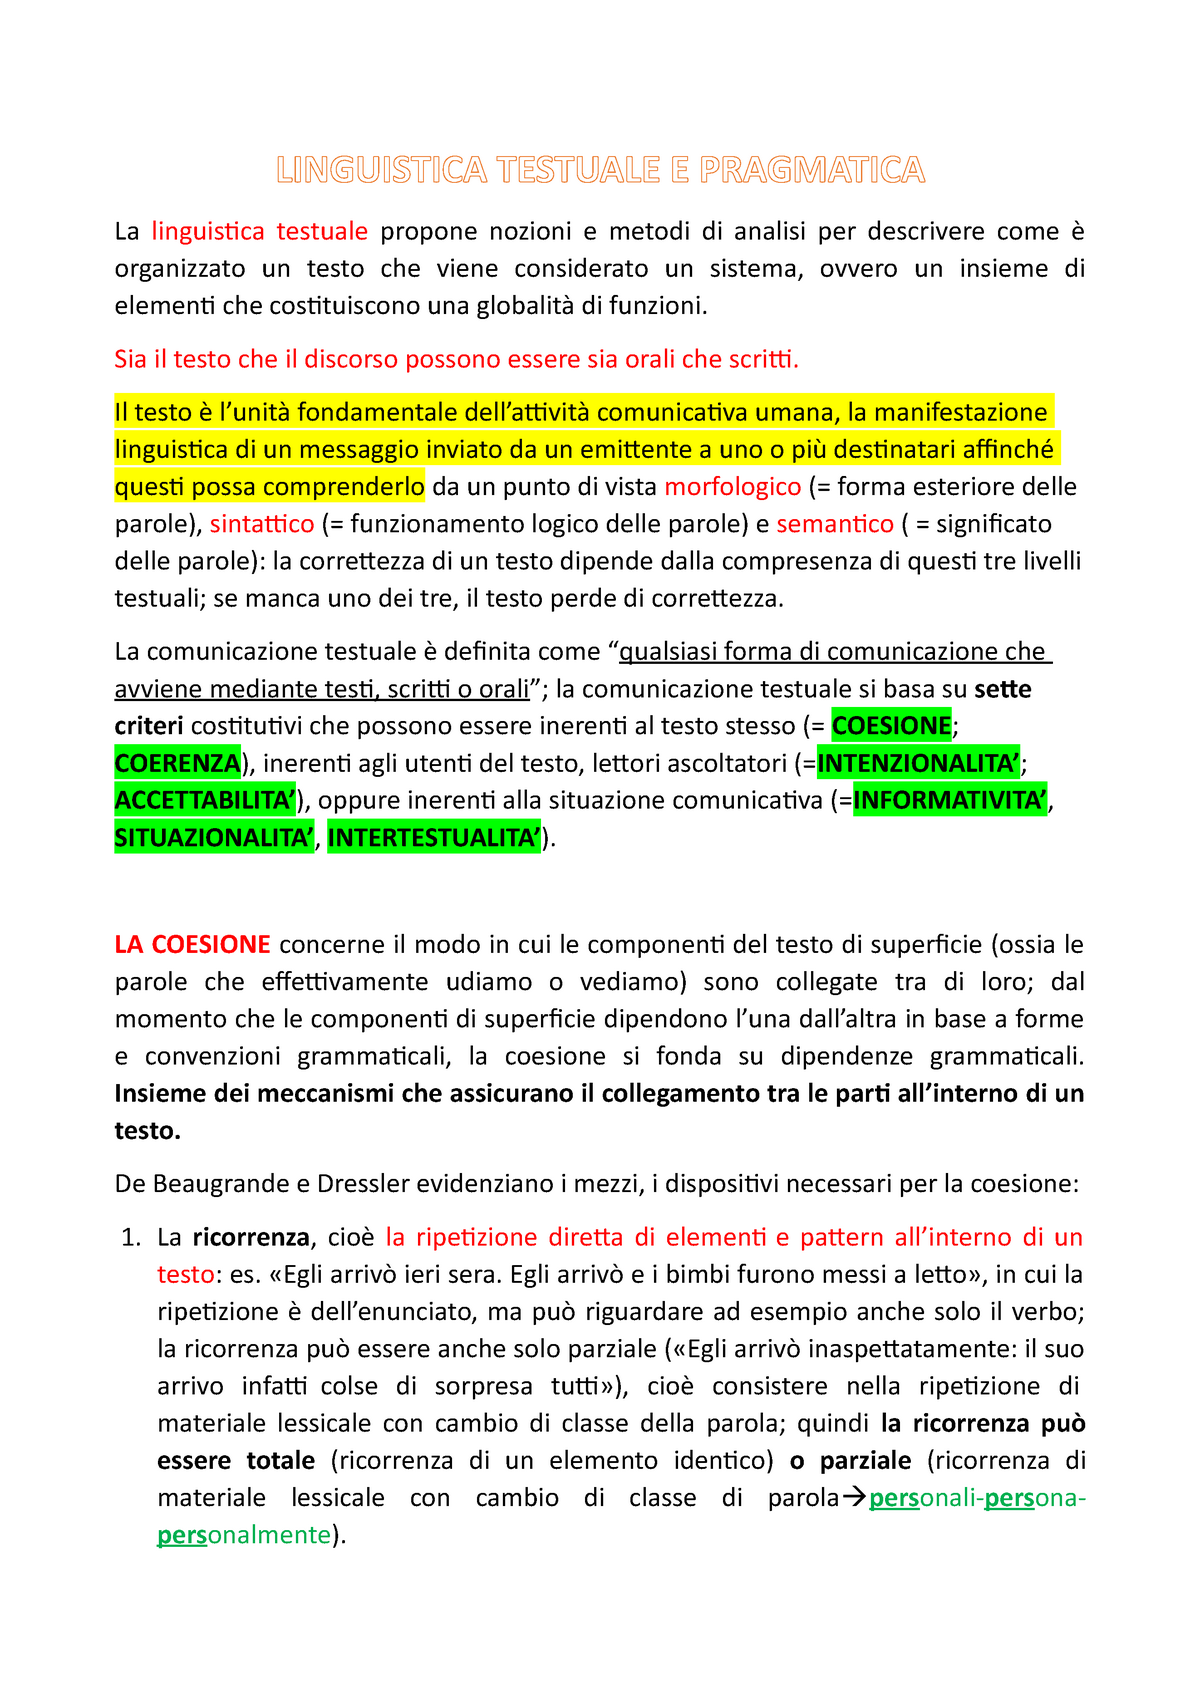 Esonero Linguistica Testuale E Pragmatica Linguistica Testuale E Pragmatica La Linguistica 2906